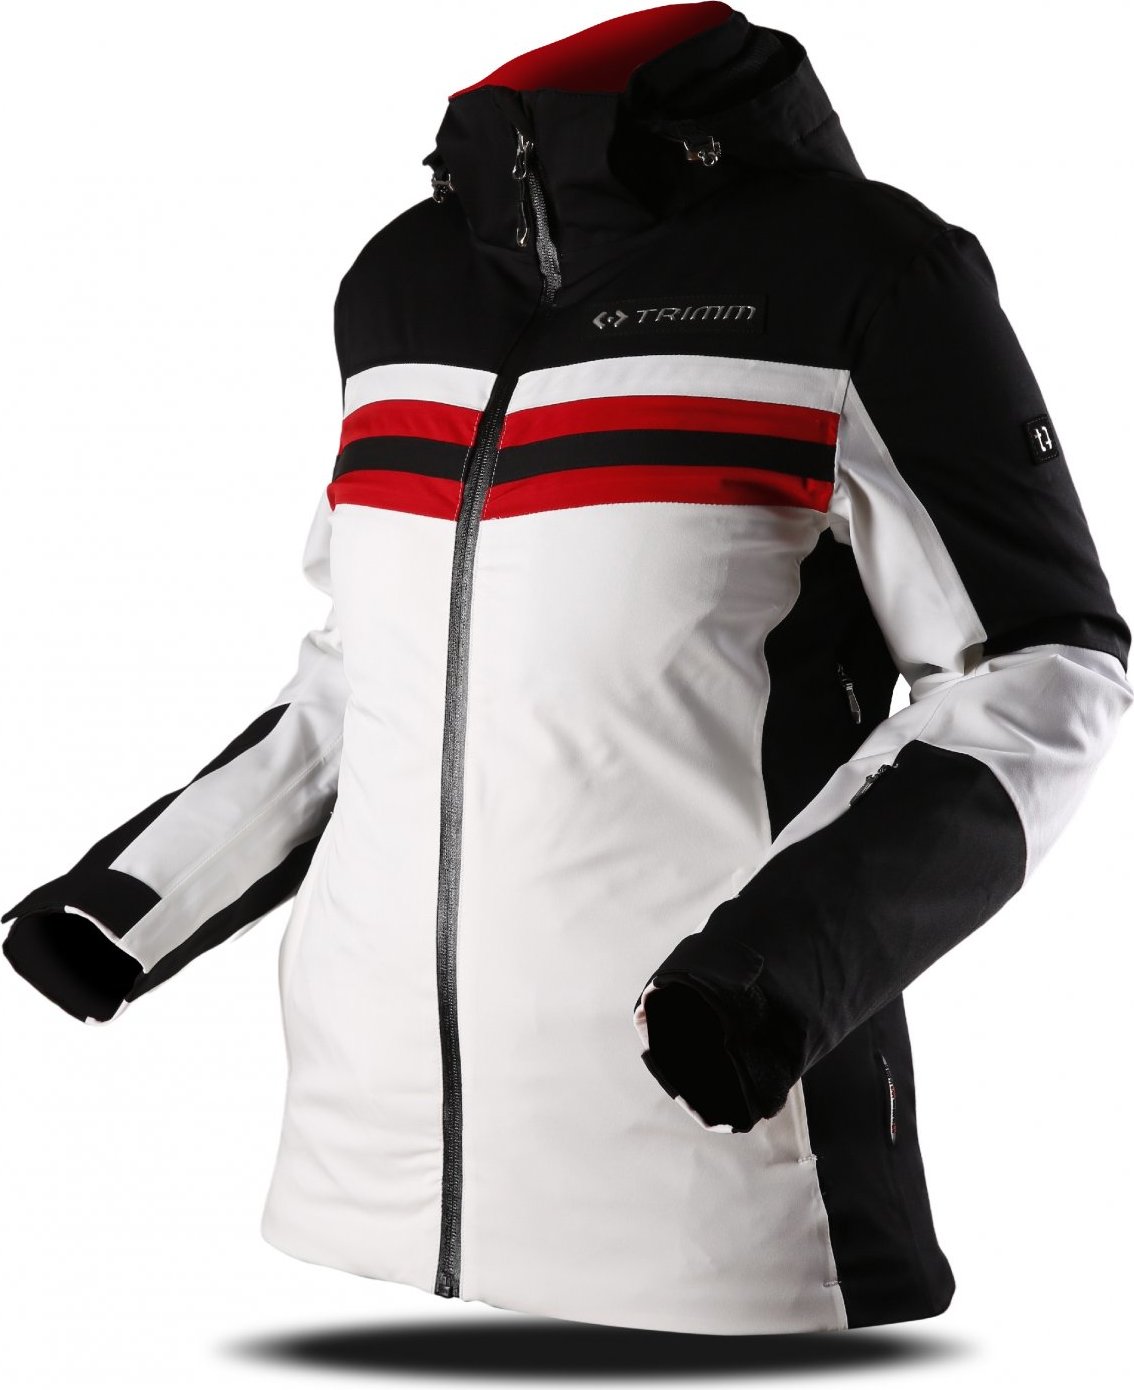 Dámská lyžařská bunda TRIMM Ilusion bílá Velikost: XL, Barva: white/red/black